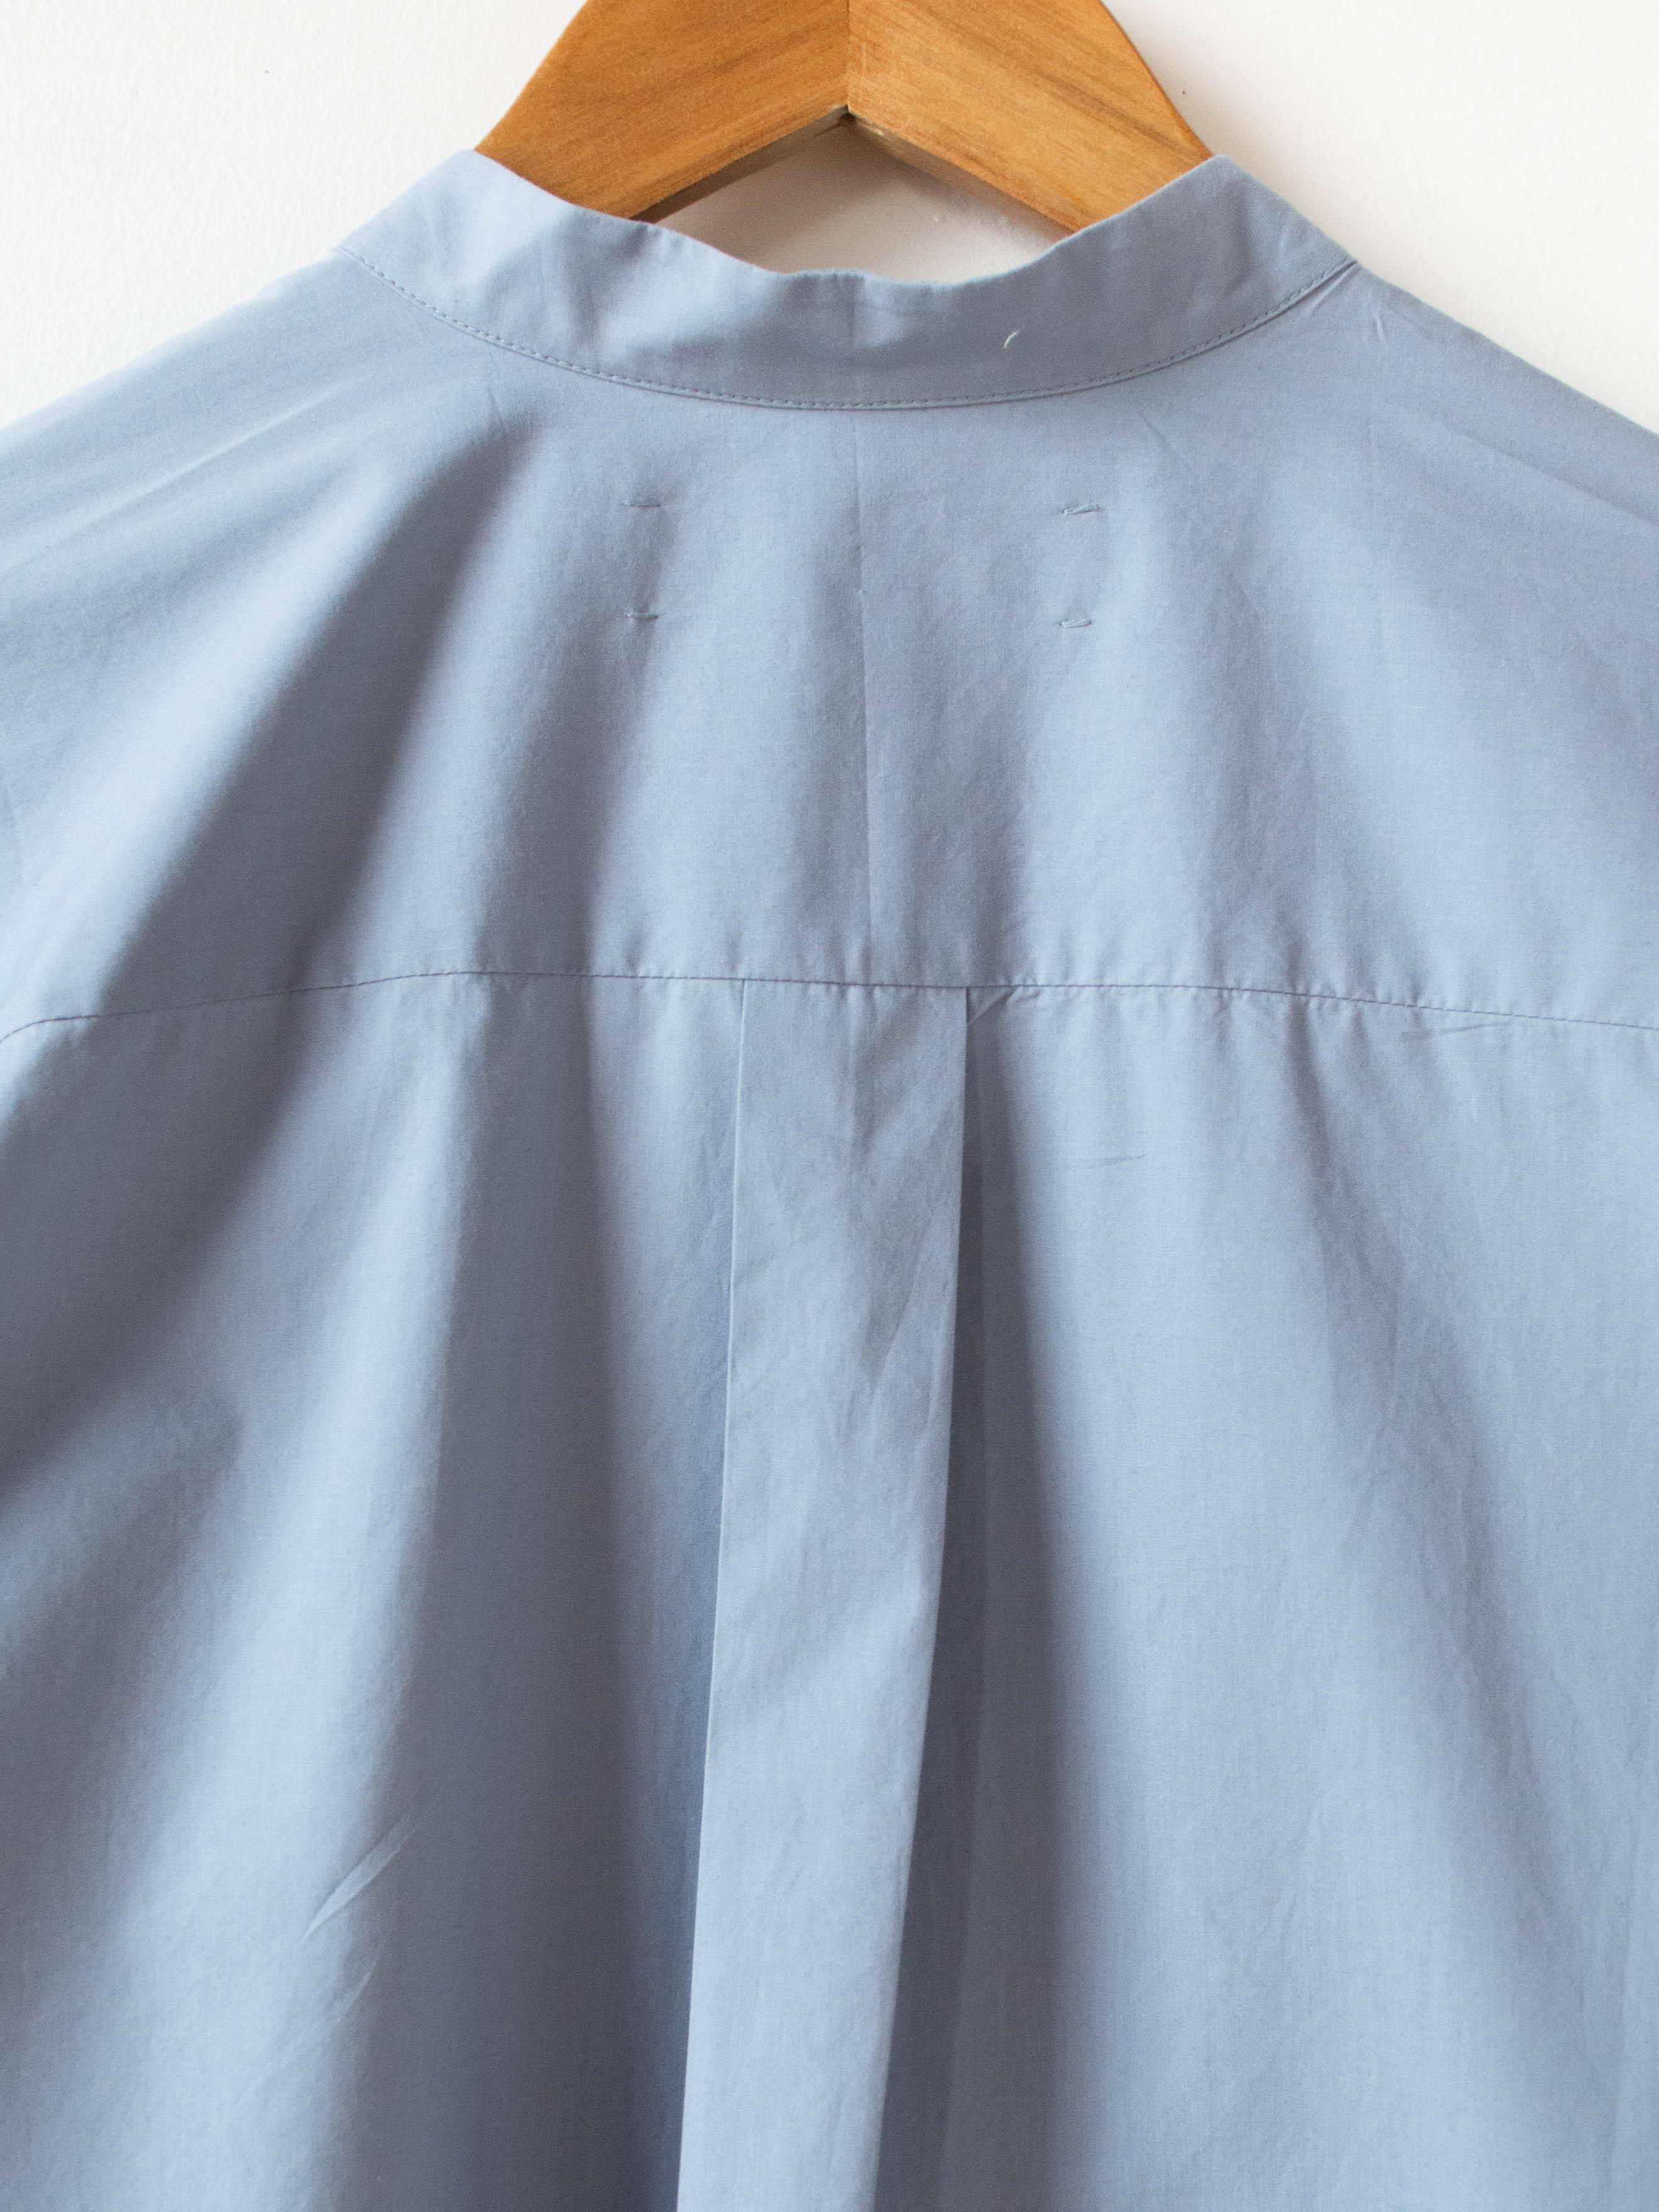 Namu Shop - Jan Machenhauer Ran Shirt - Blue Gray